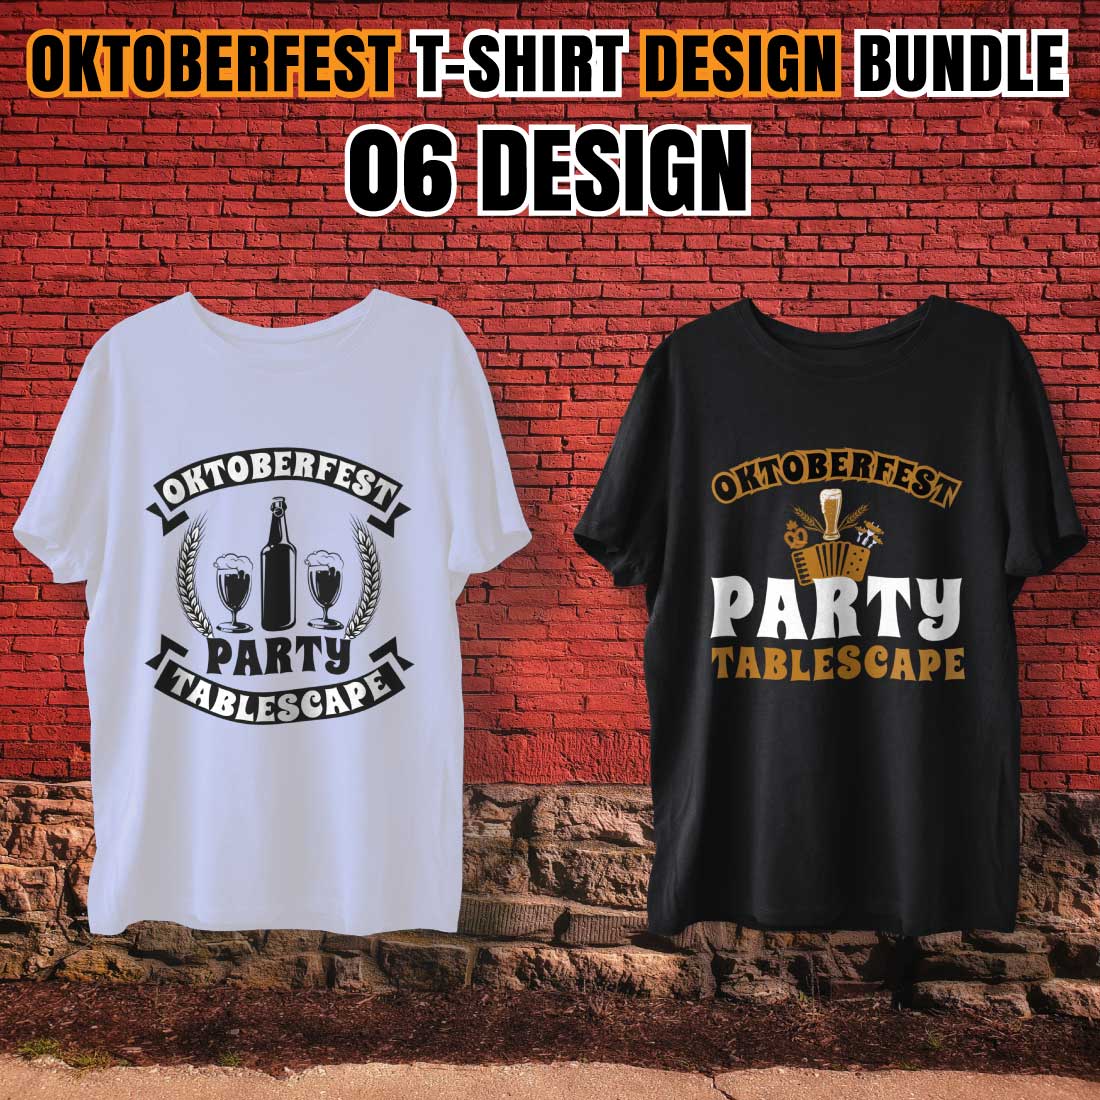 7 Print Ready Oktoberfest T-Shirt Design Bundle facebook image.